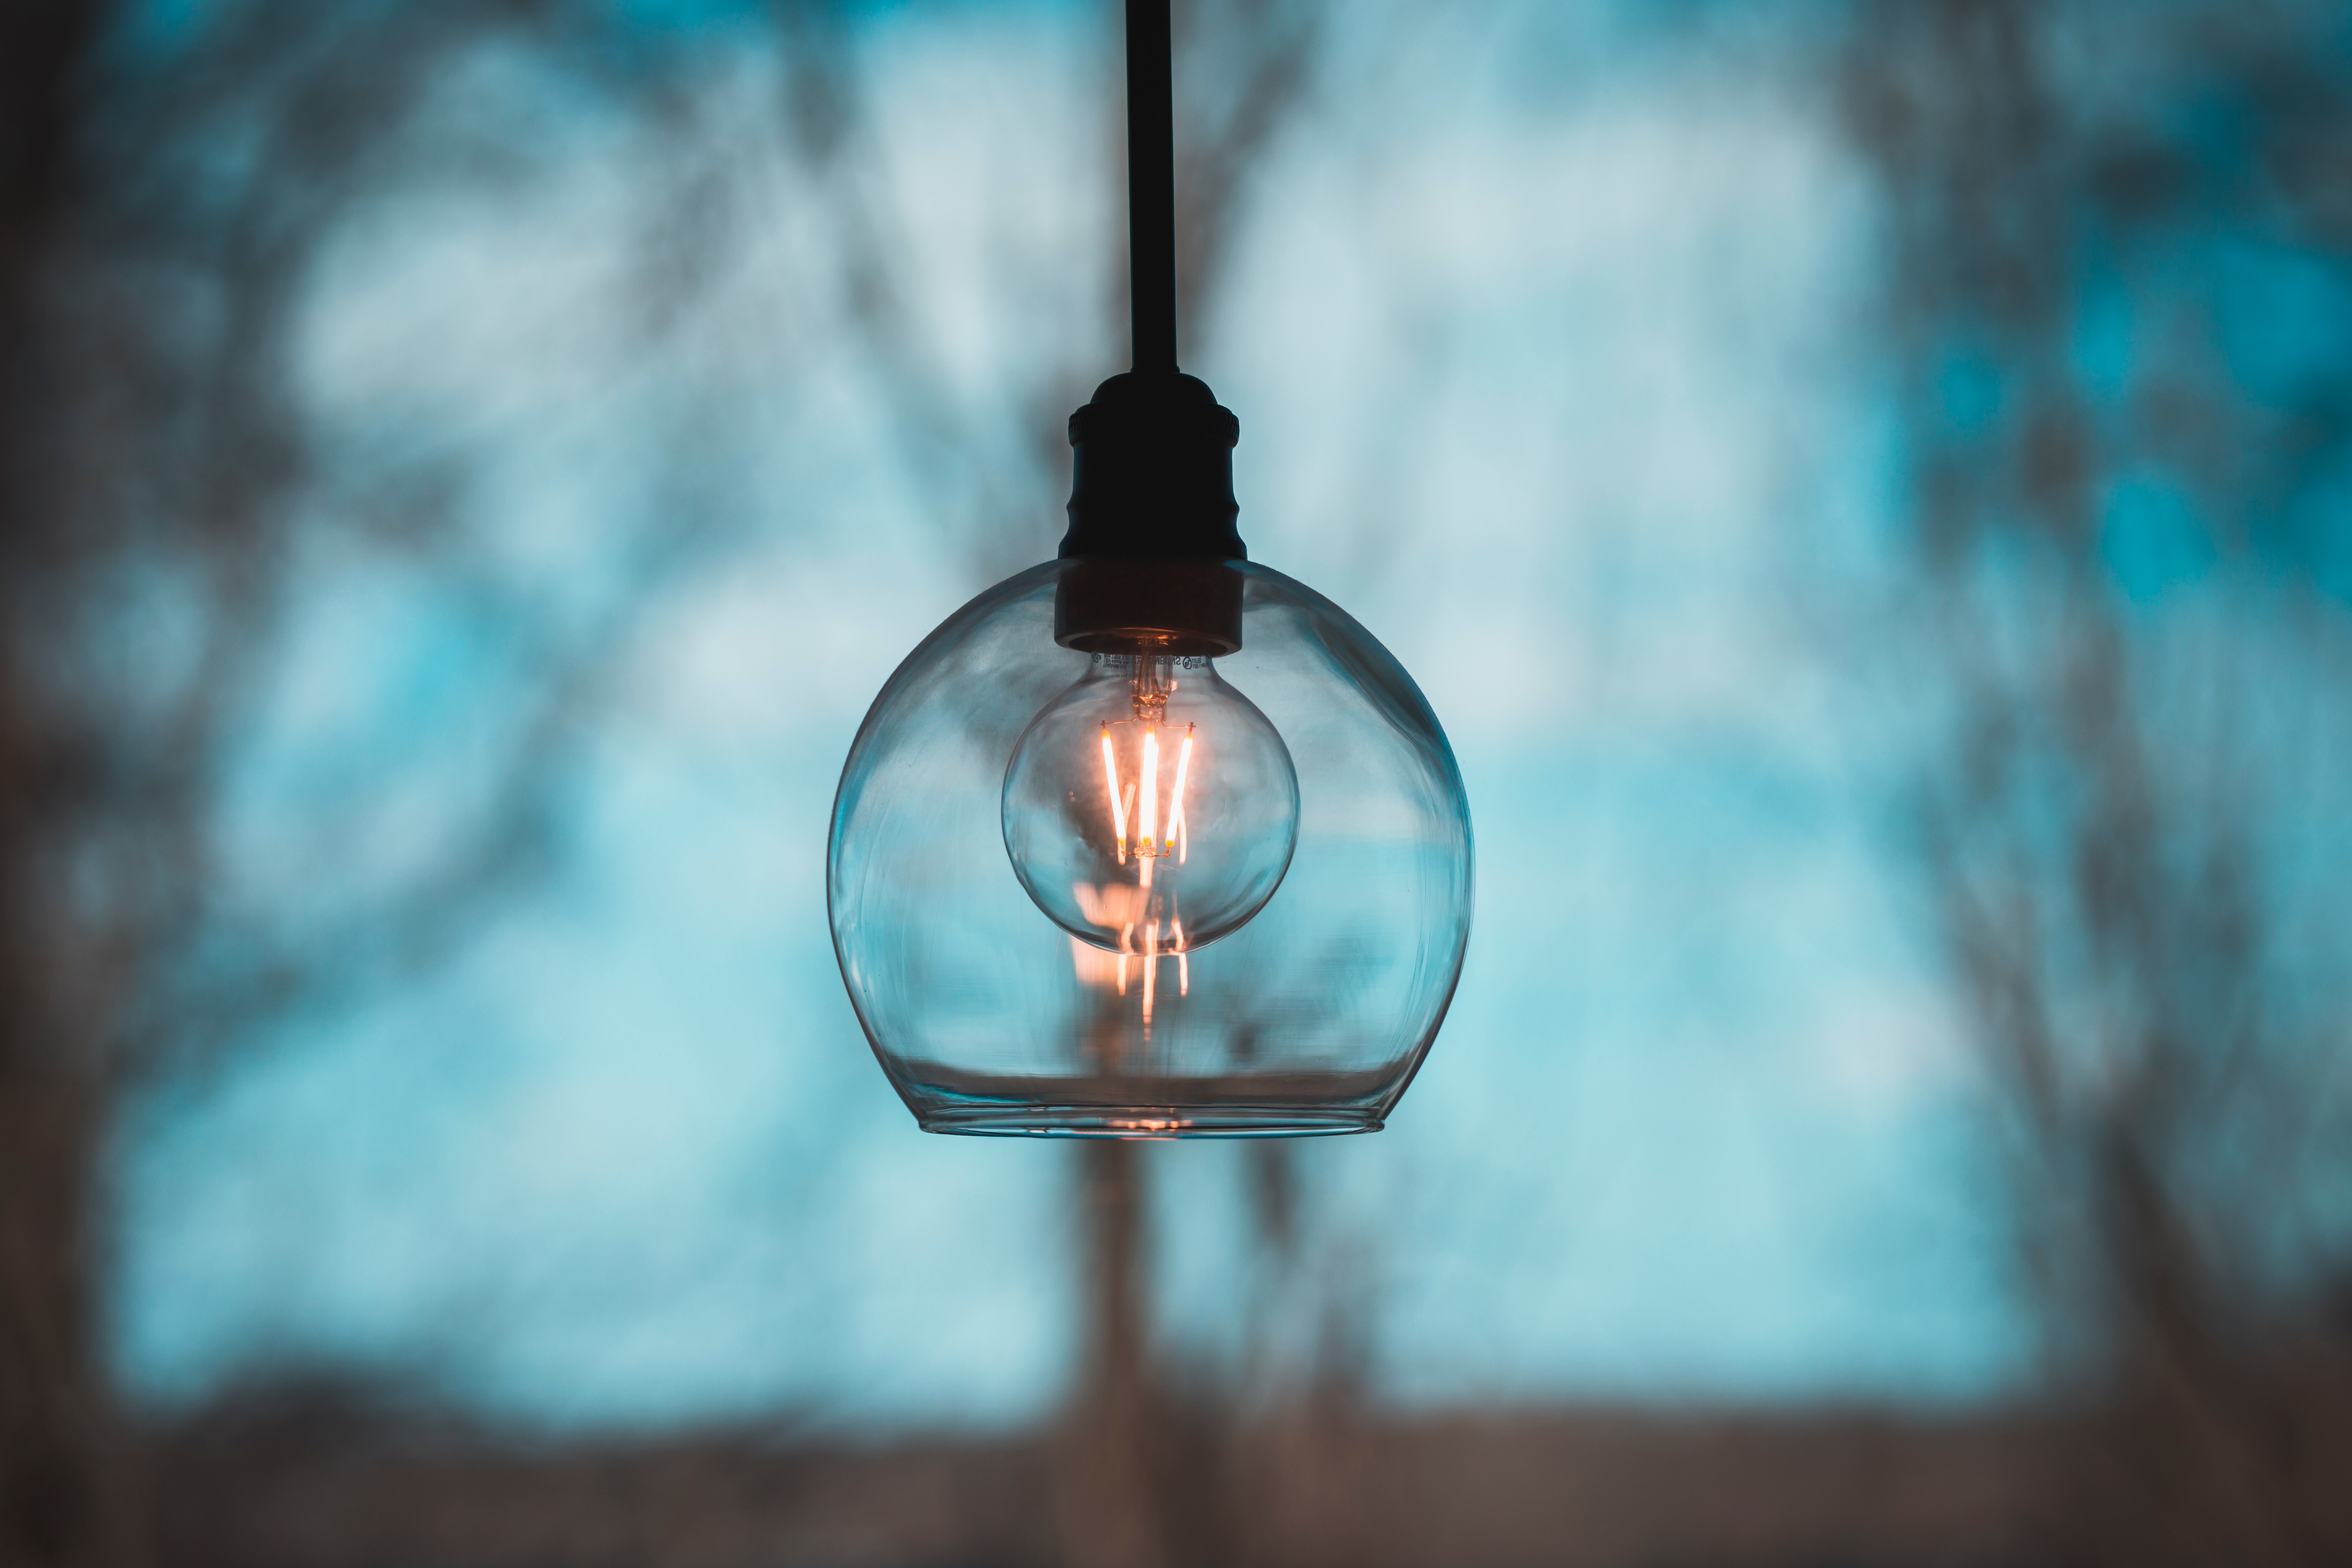 Lightbulb representing idea generation